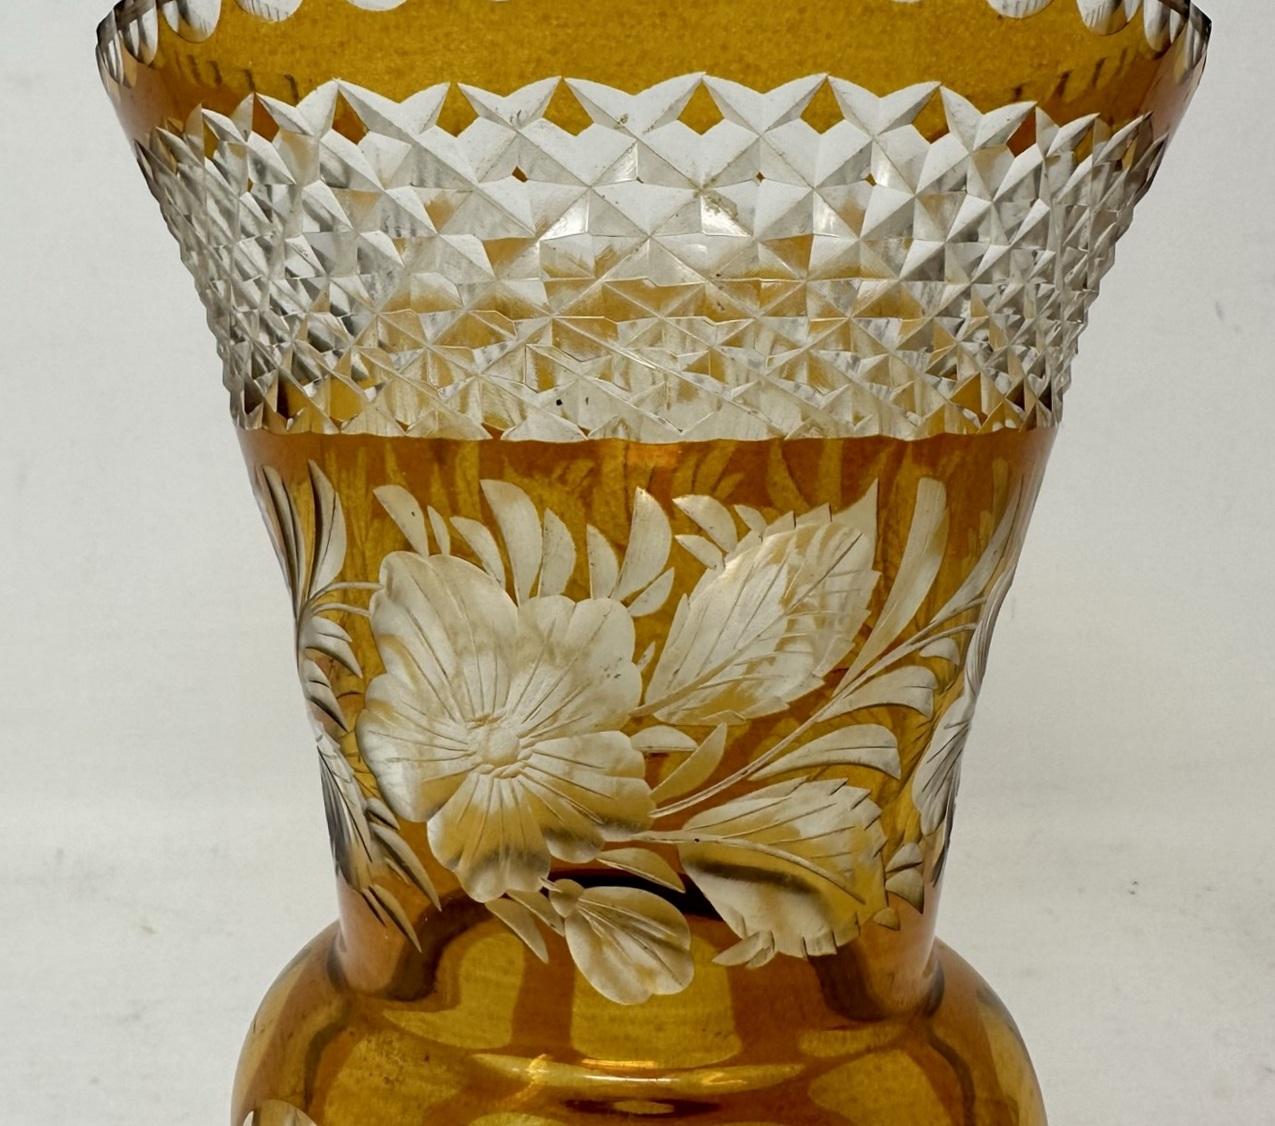 Polished Antique Vintage Edwardian Bohemian Handcut Crystal Amber Vase Bowl Centerpiece